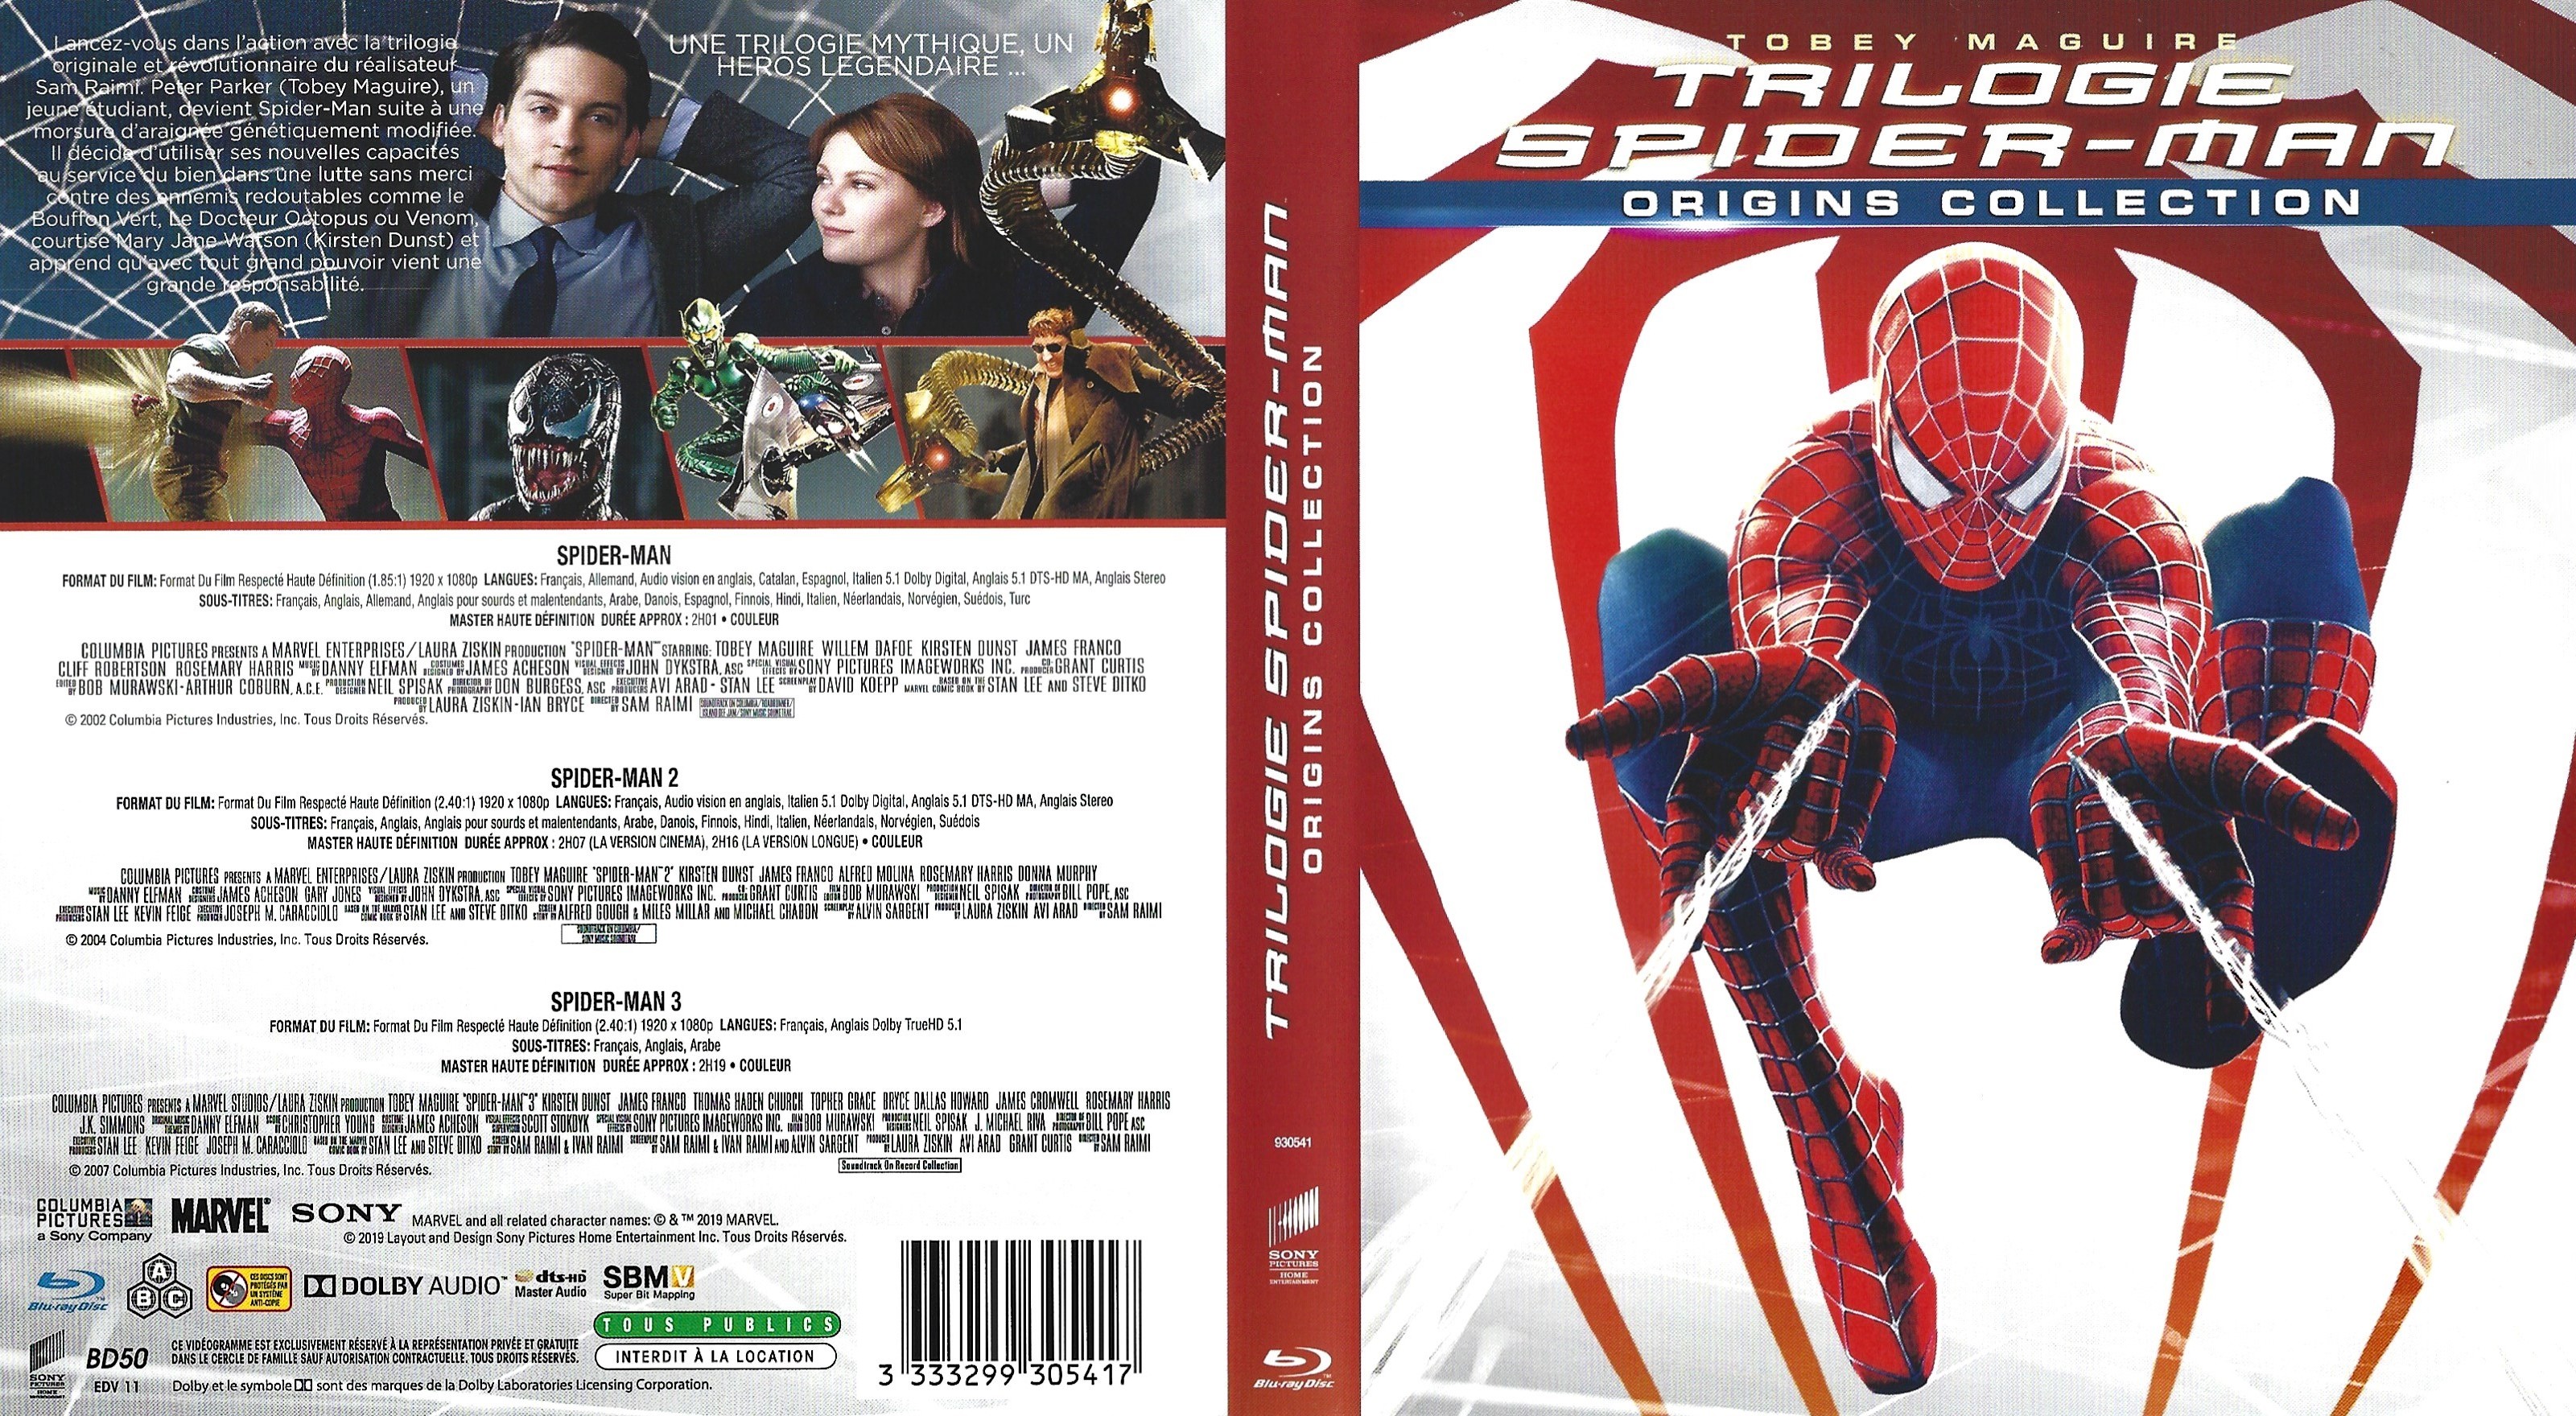 Jaquette DVD Trilogie Spider-Man Origins Collection (BLU-RAY)